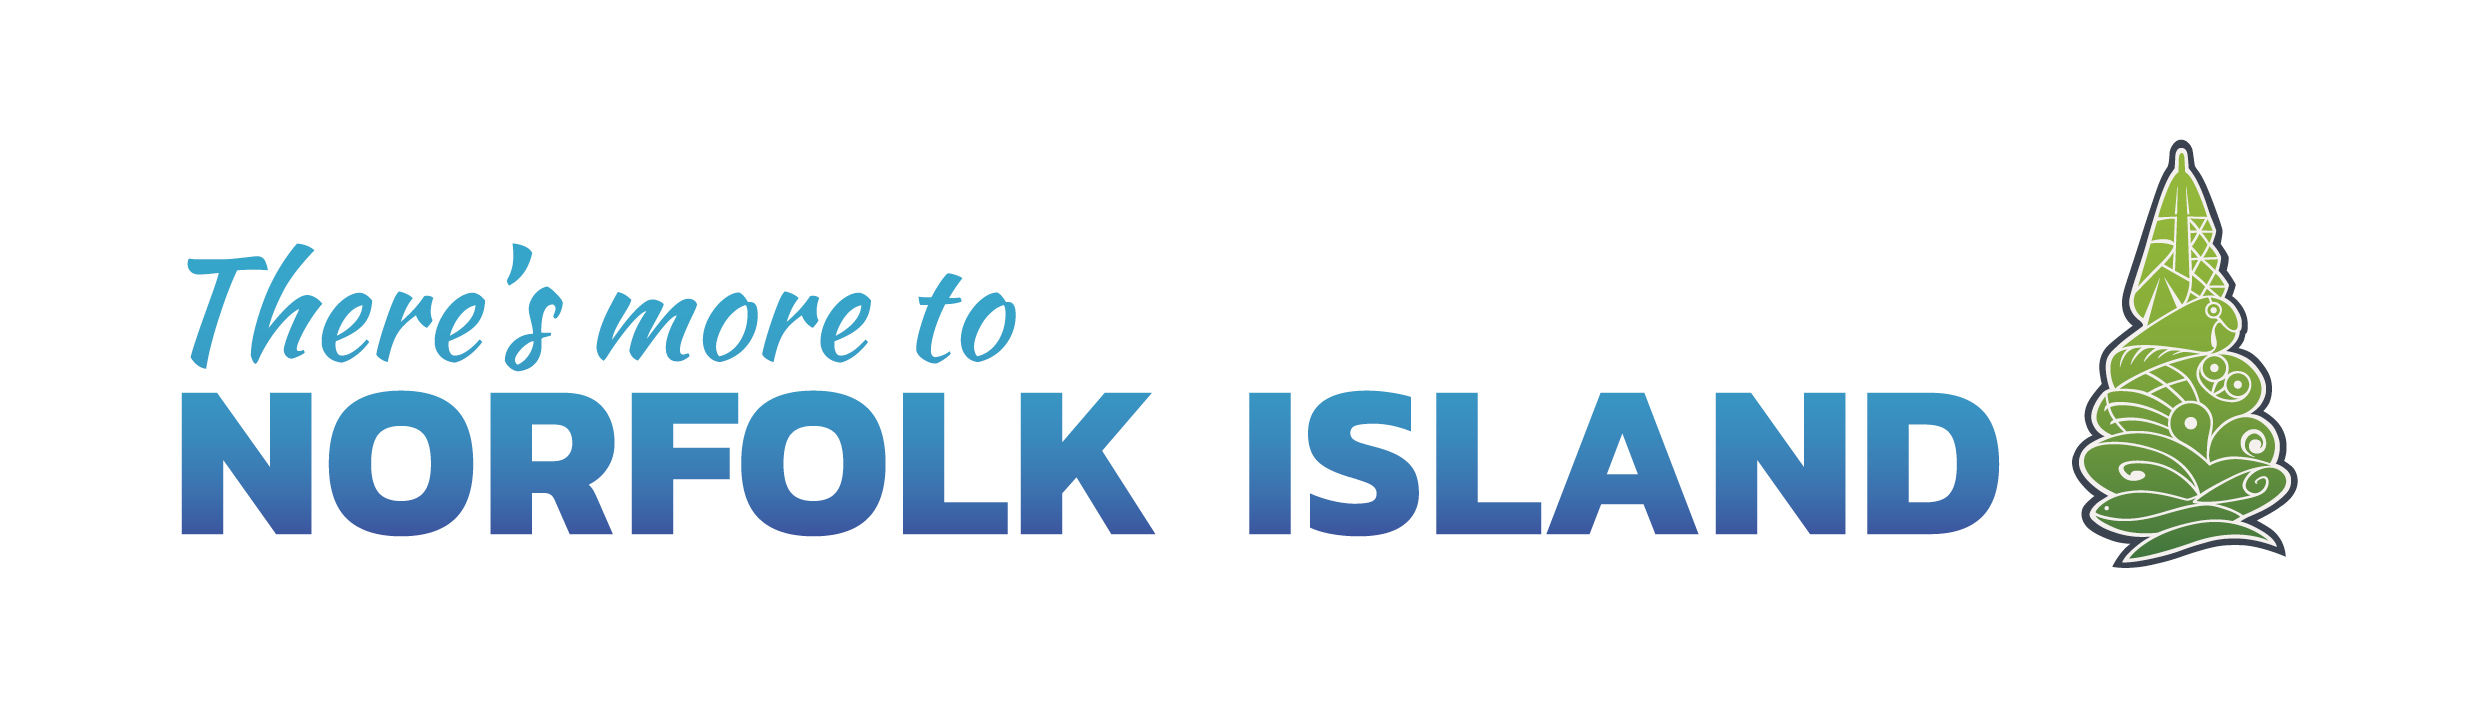 Norfolk Island Branding Update